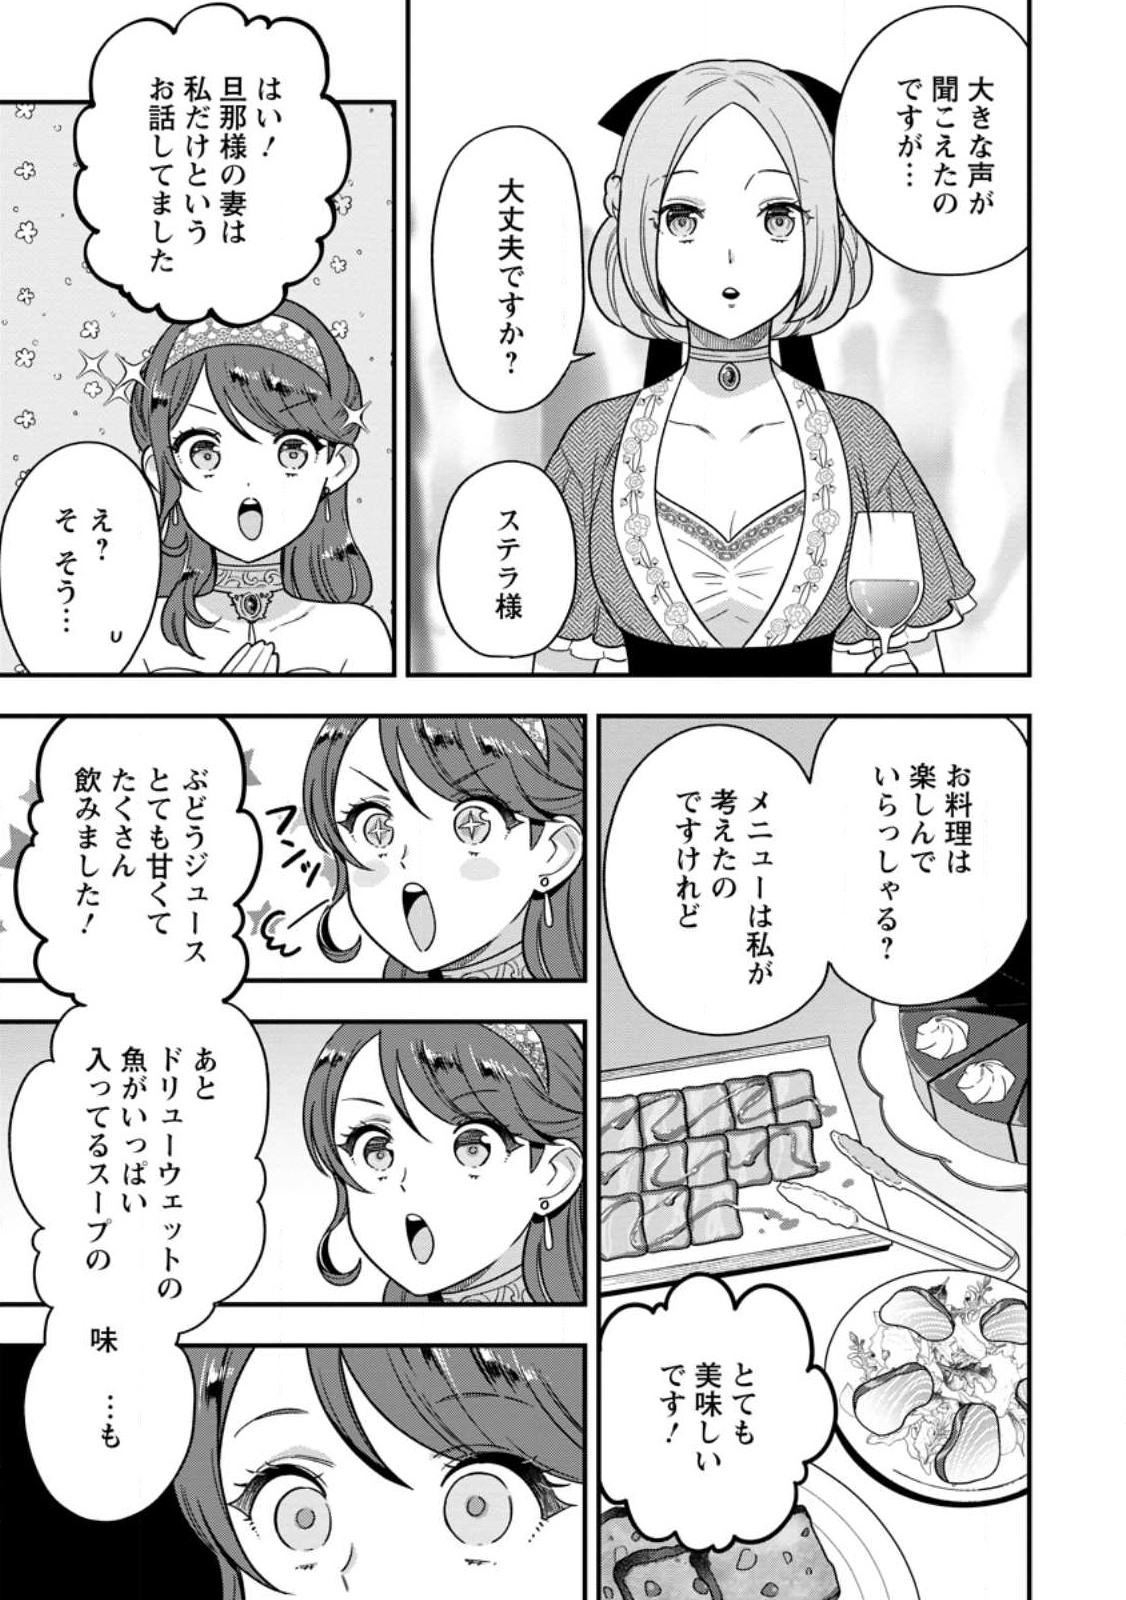 Aisanai to Iwaremashite mo - Chapter 12.3 - Page 1